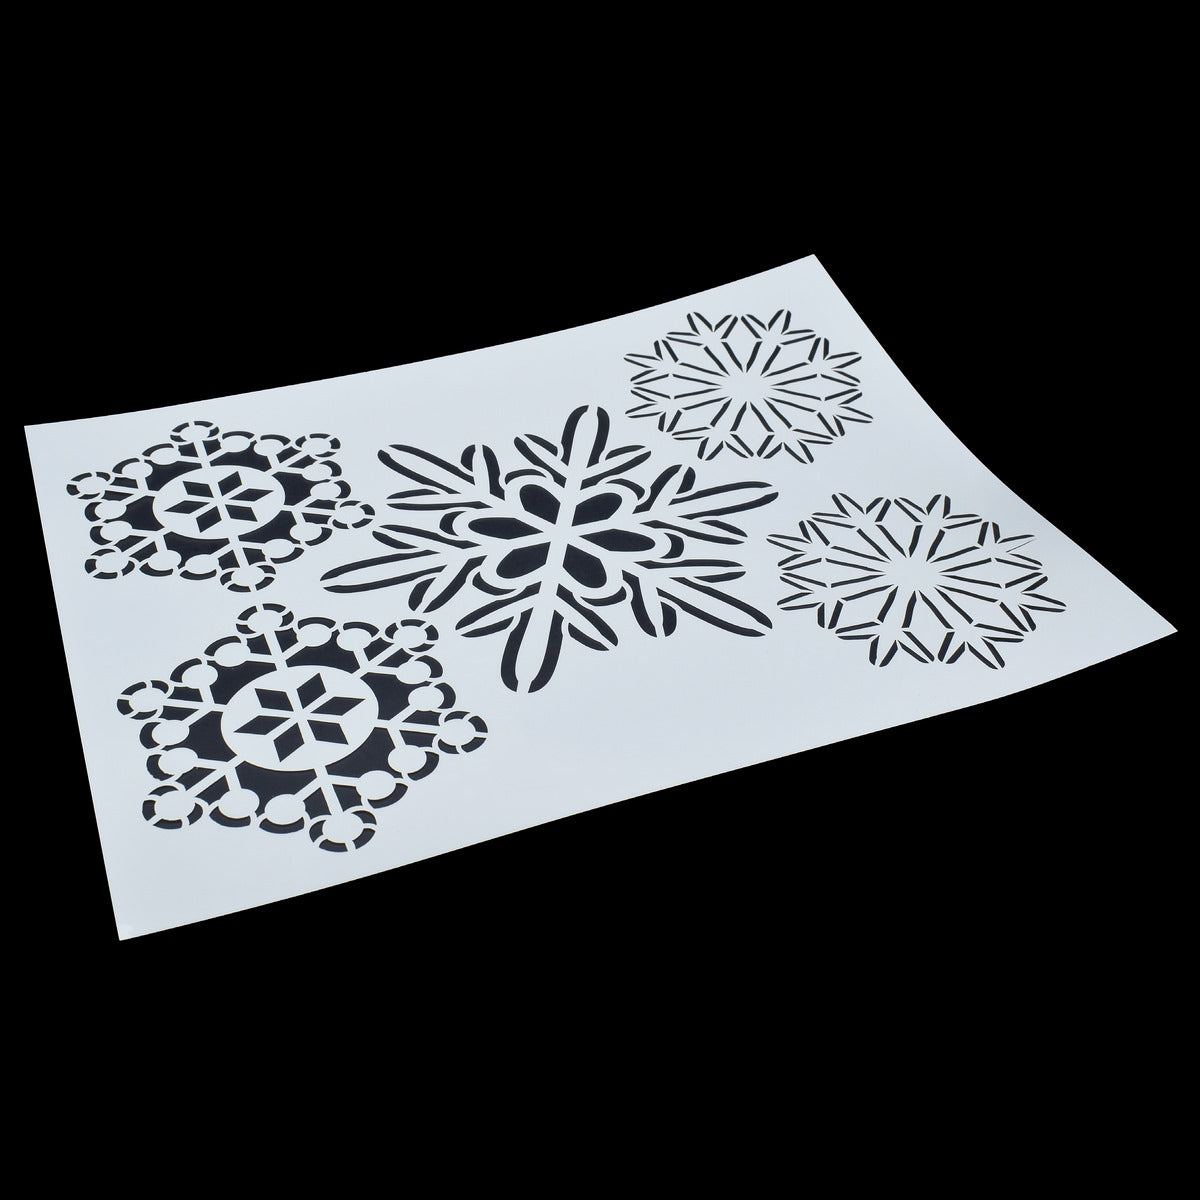 jags-mumbai Stencil Winter Wonderland: Stencil Plastic A4 size 5 Snowflake Design for Festive Crafts